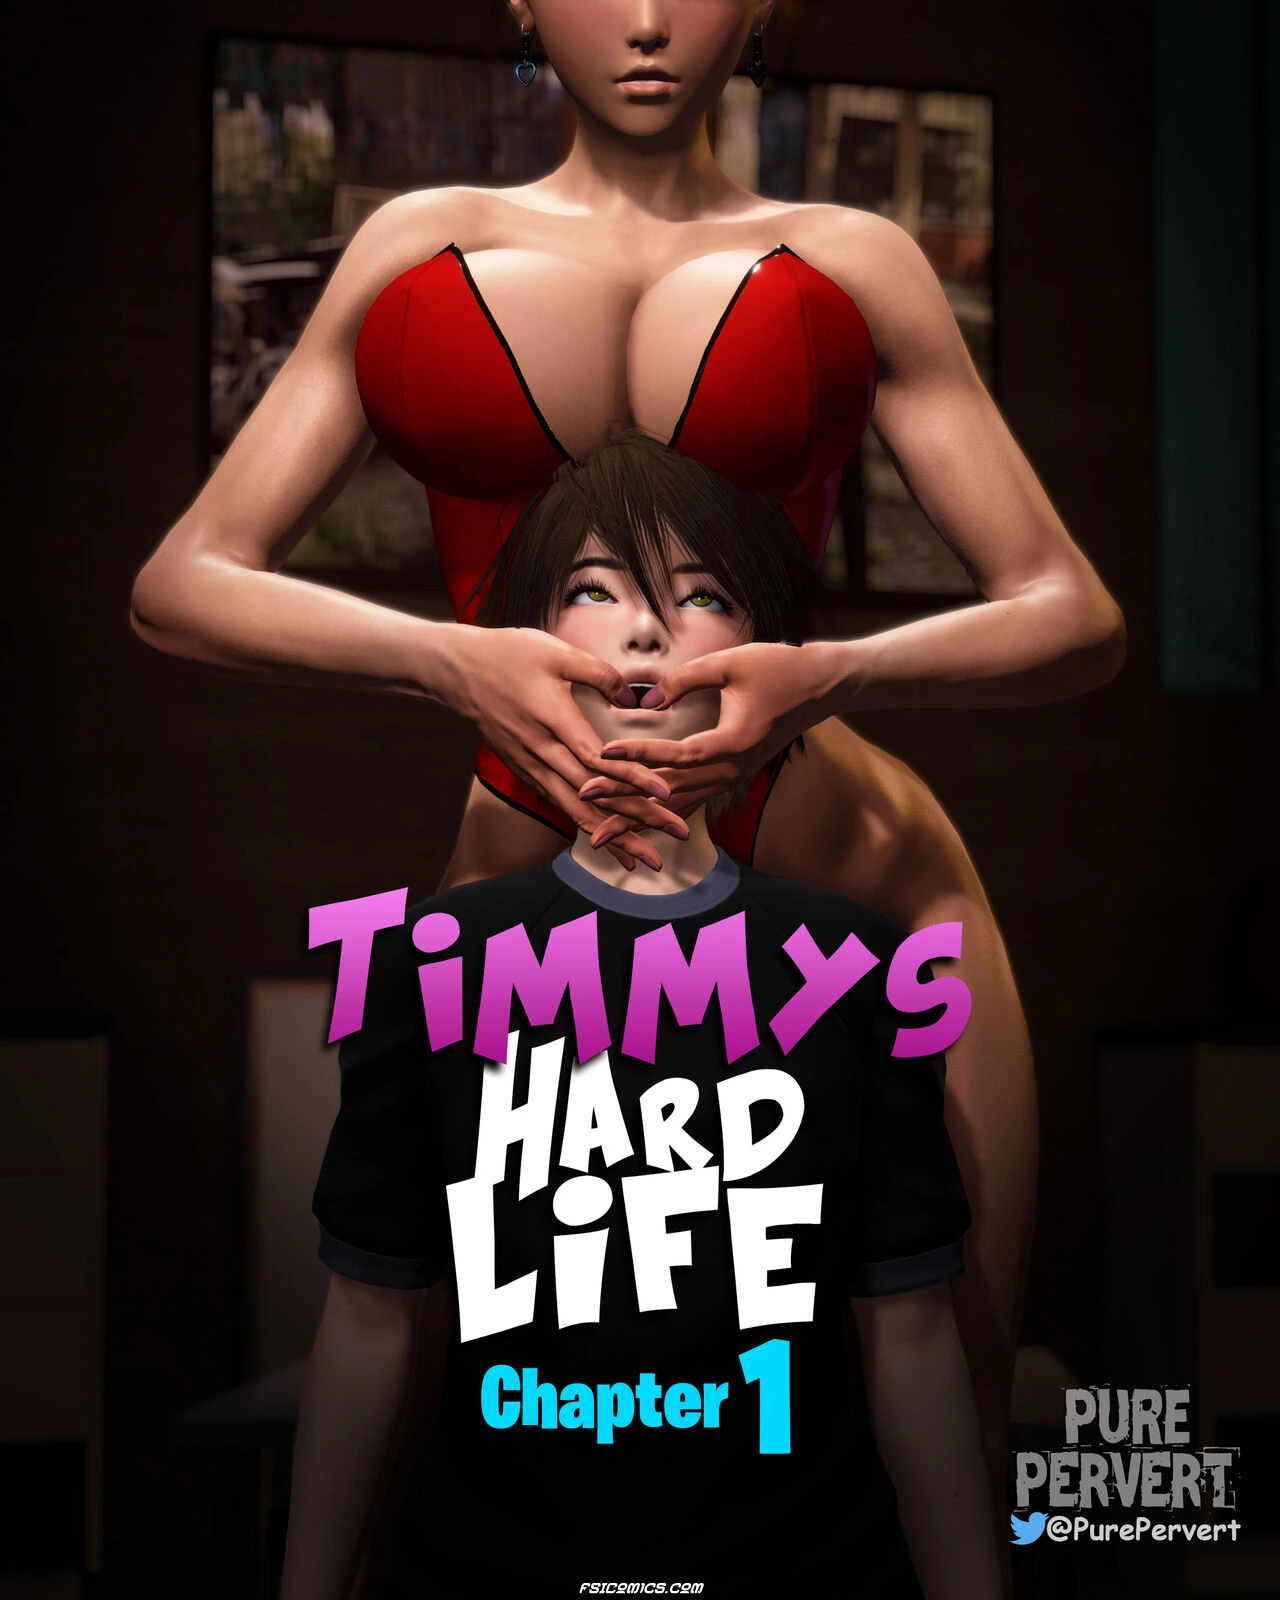 Timmy's Hard Life Chapter 1 - PurePervert - 47 - FSIComics